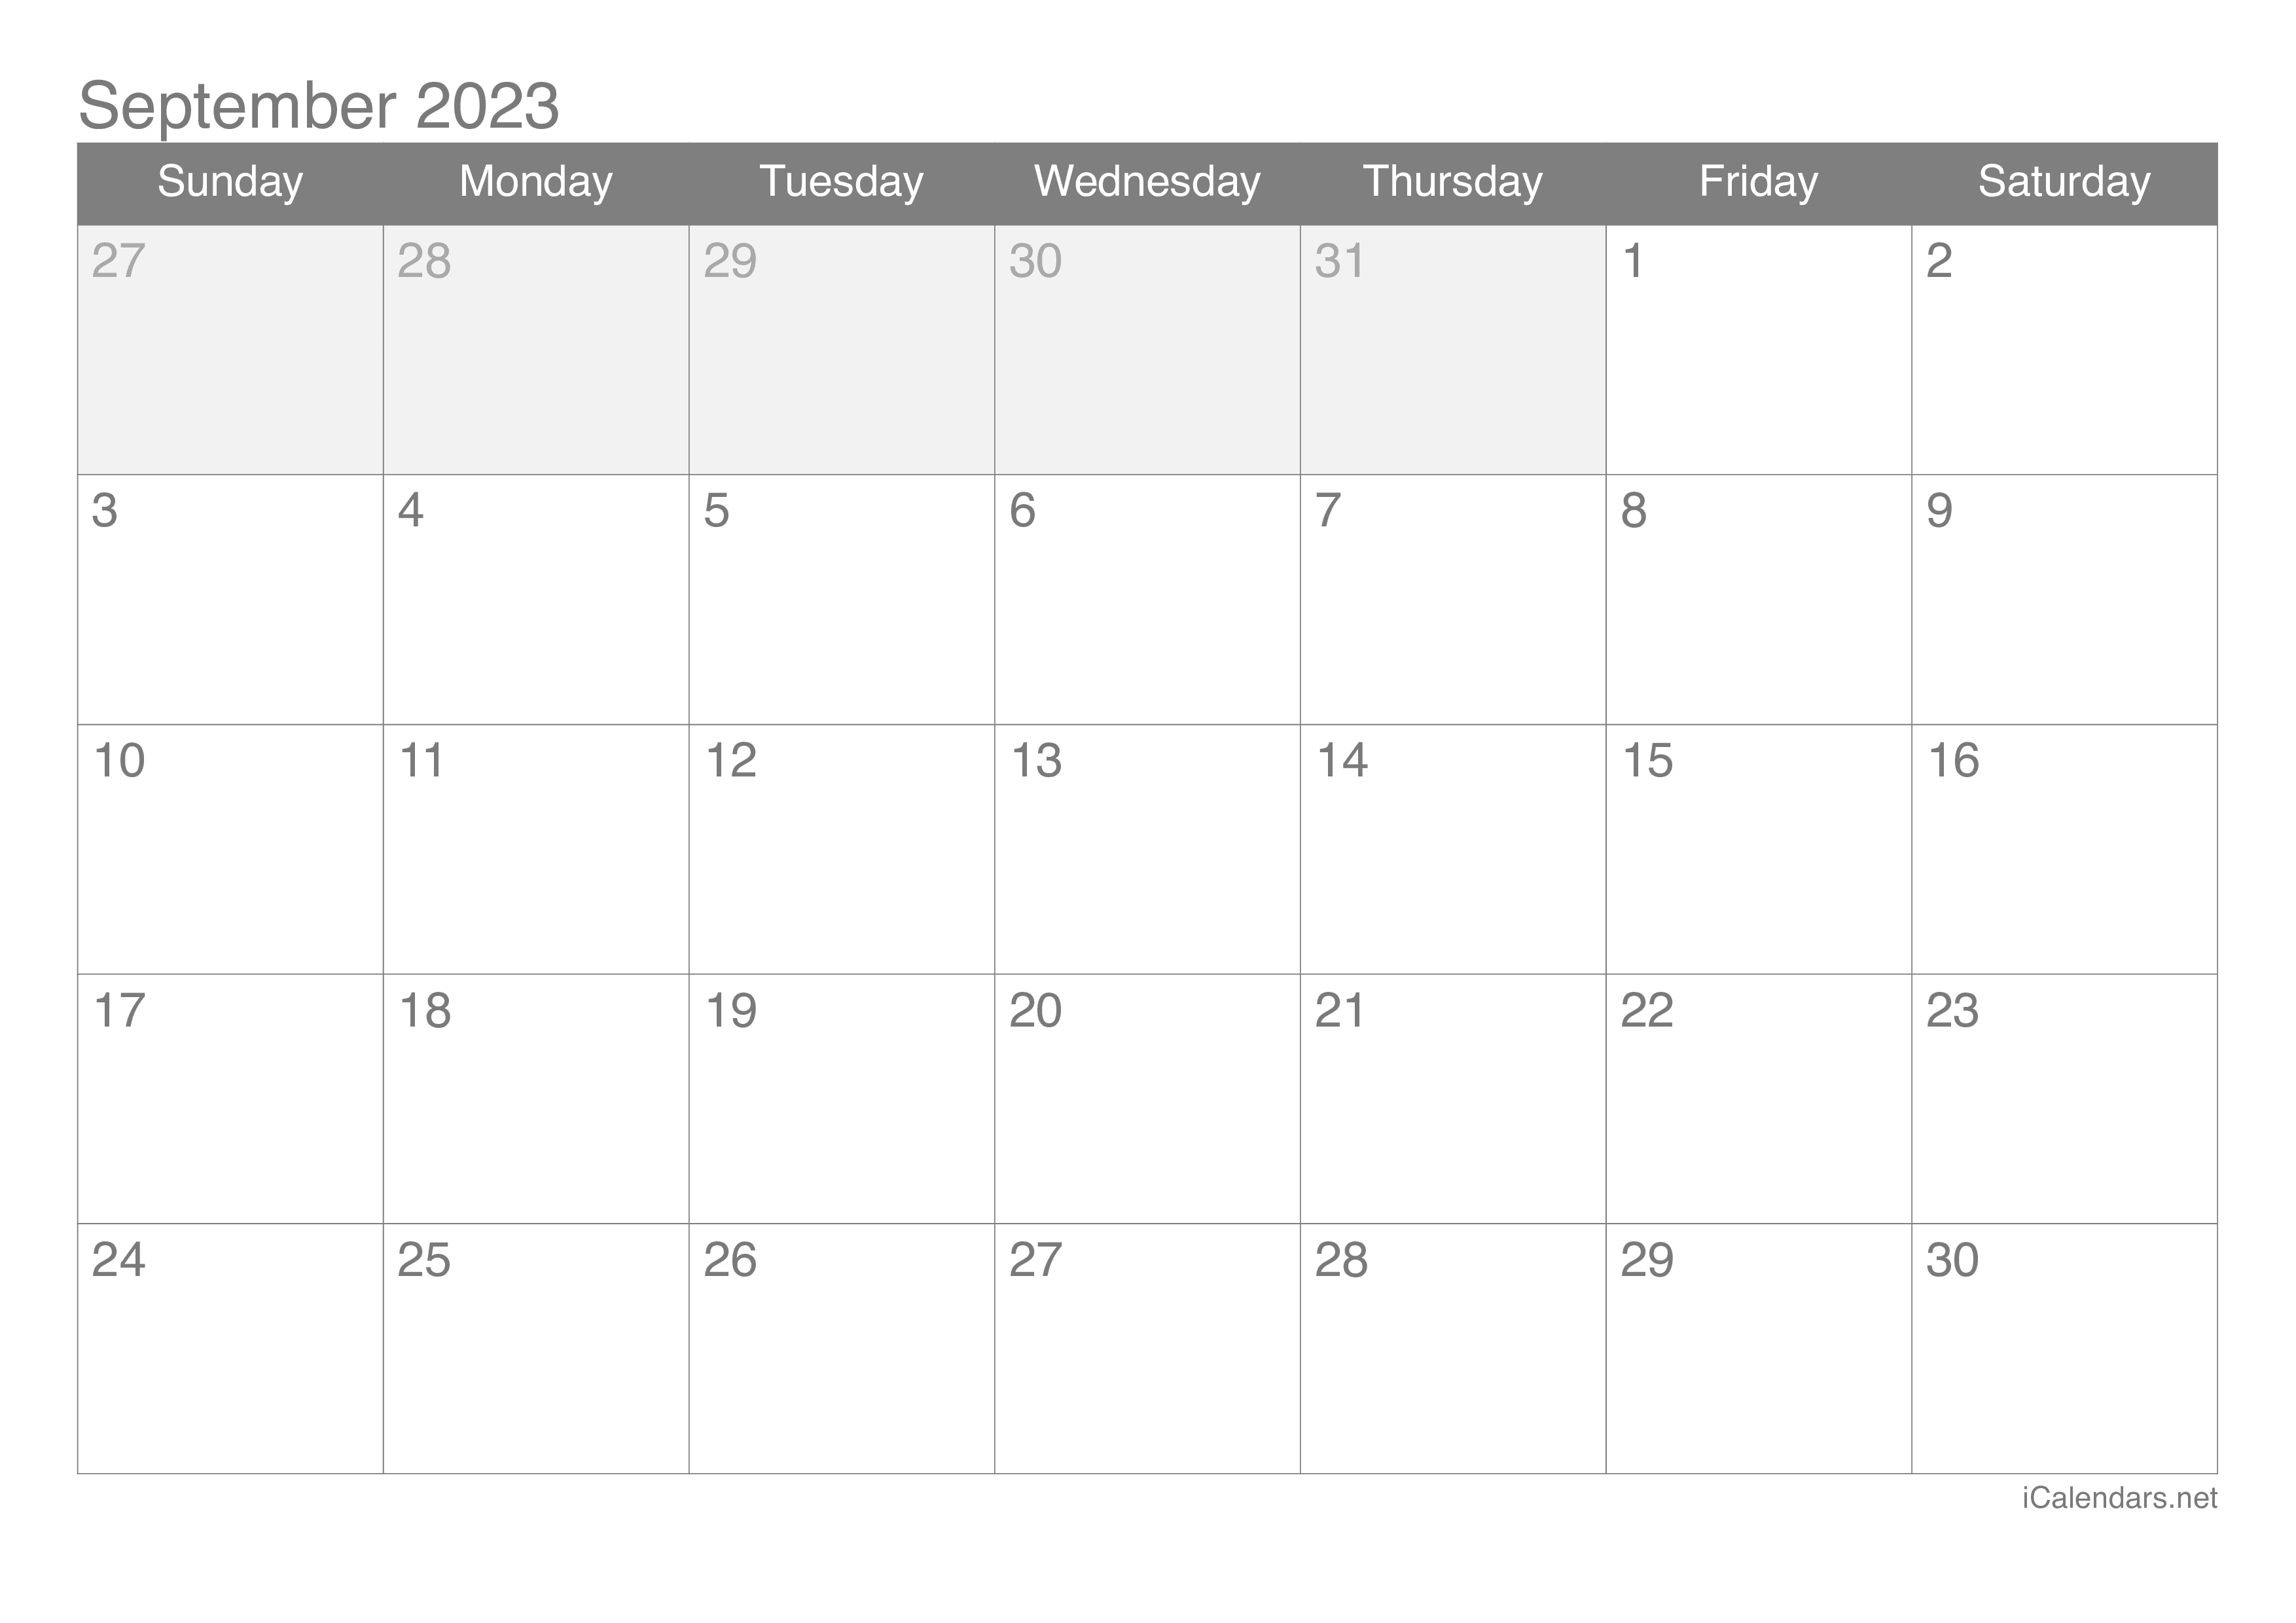 2023 September Calendar